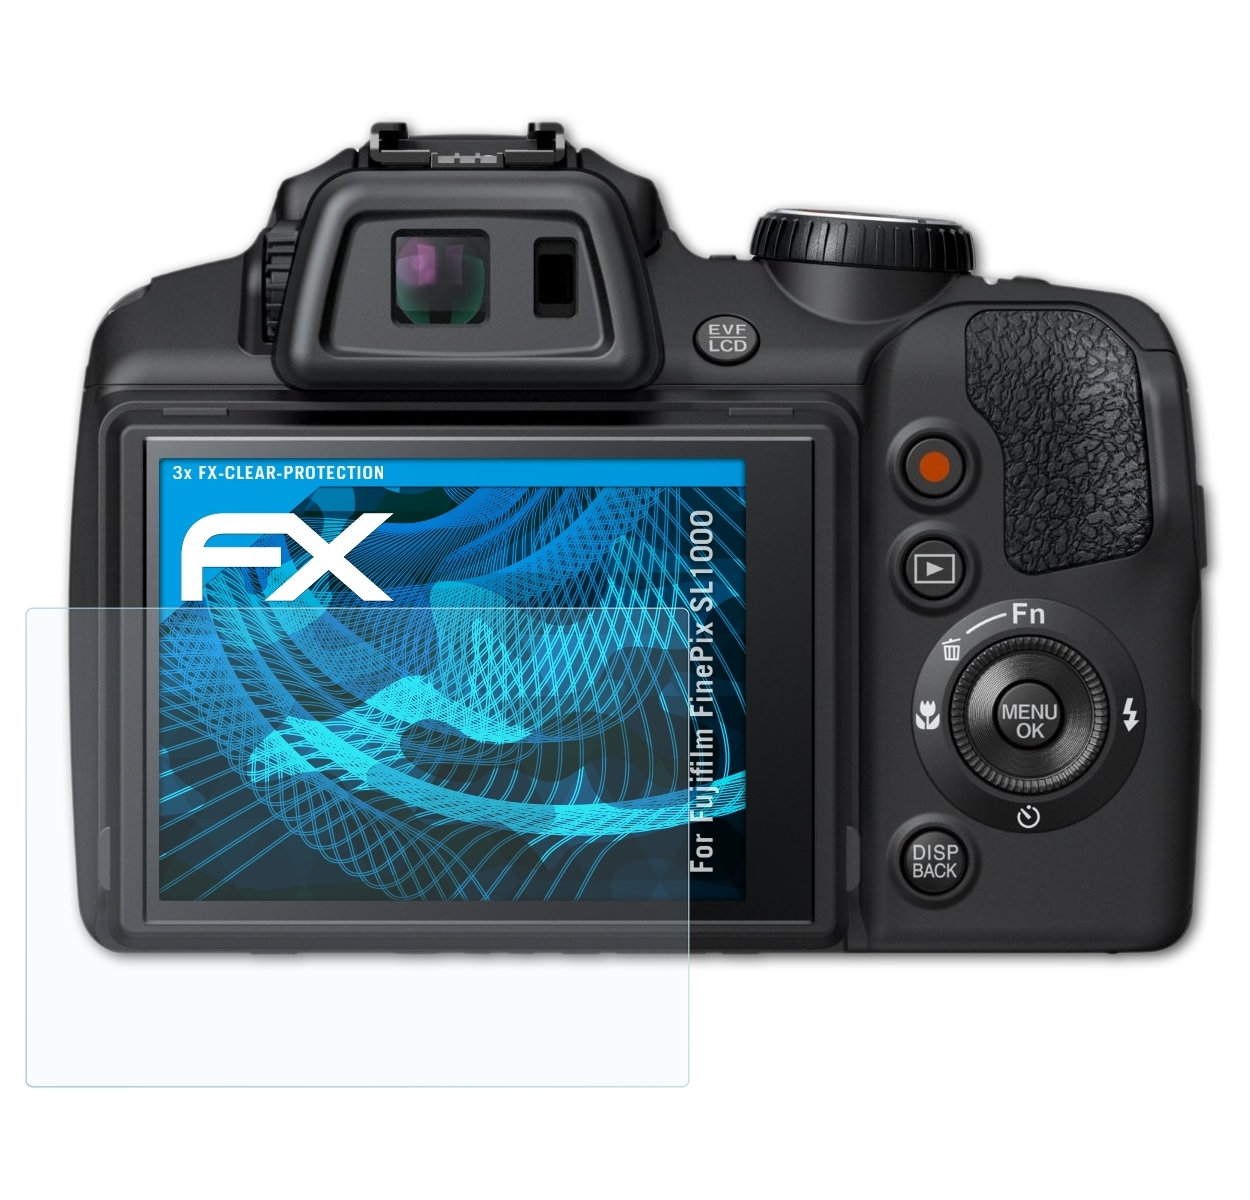 ATFOLIX 3x FX-Clear Fujifilm Displayschutz(für SL1000) FinePix